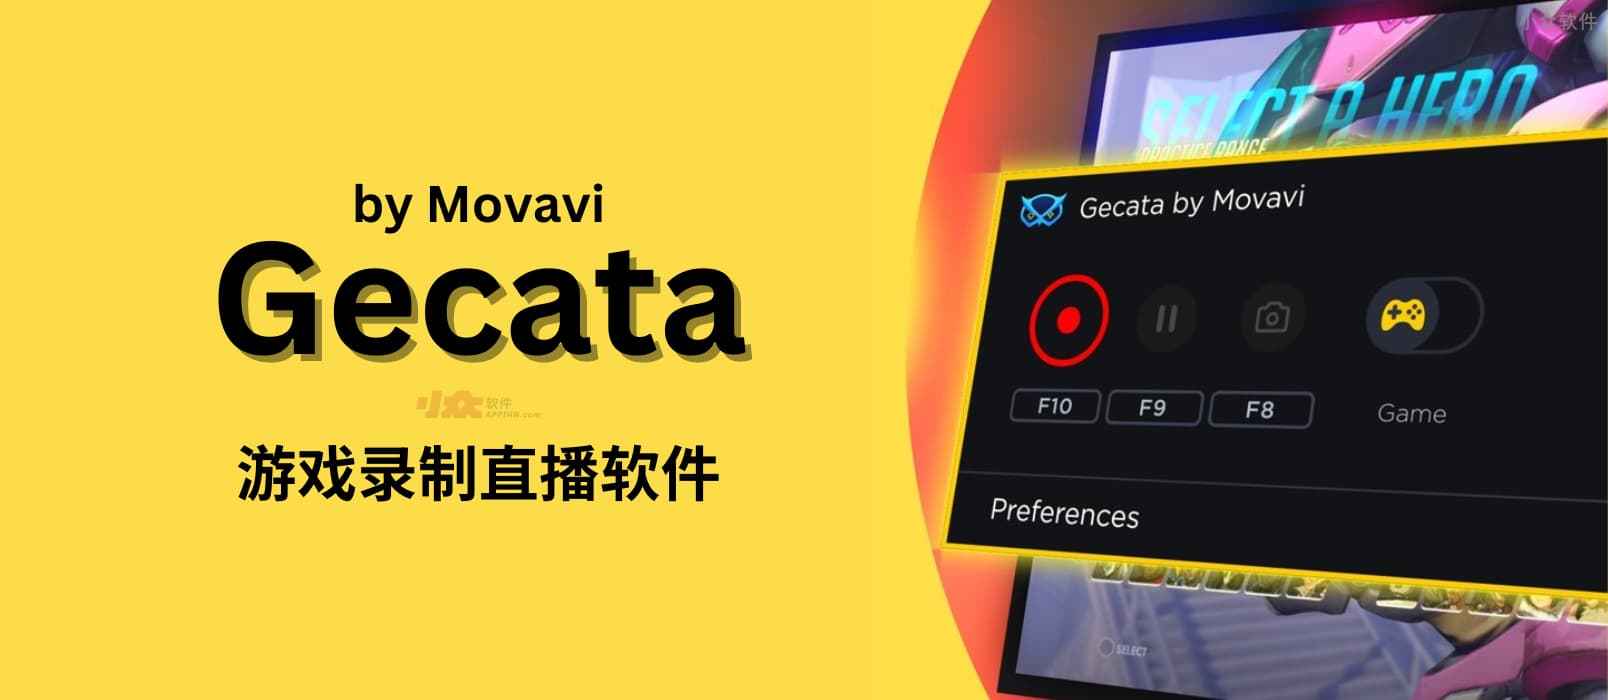 Gecata by Movavi -  游戏录制直播软件[Win]